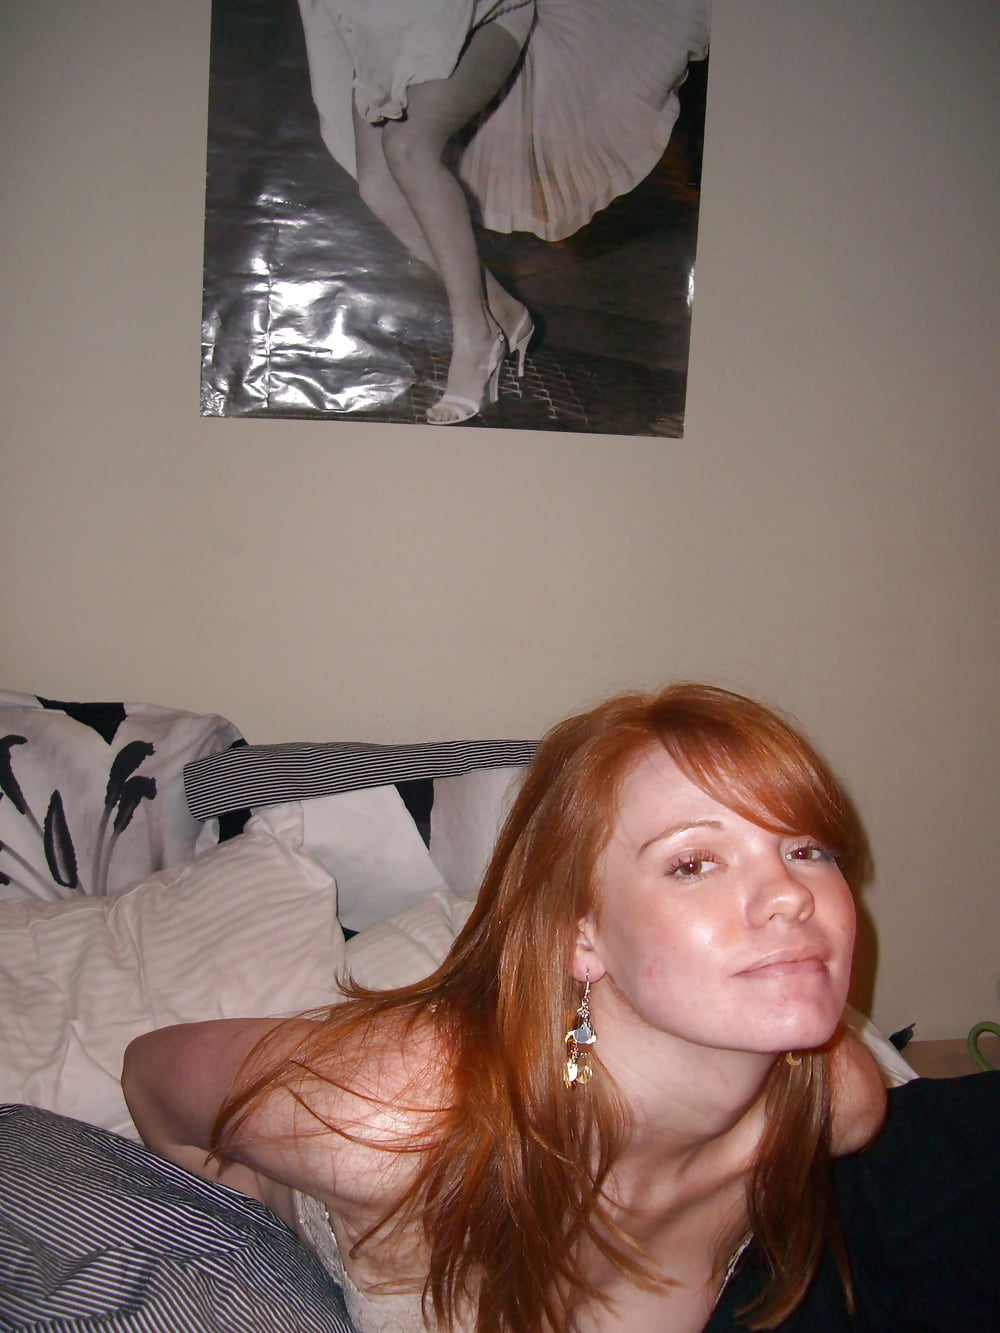 Sex Gallery redhead girlfriend naked 104359413